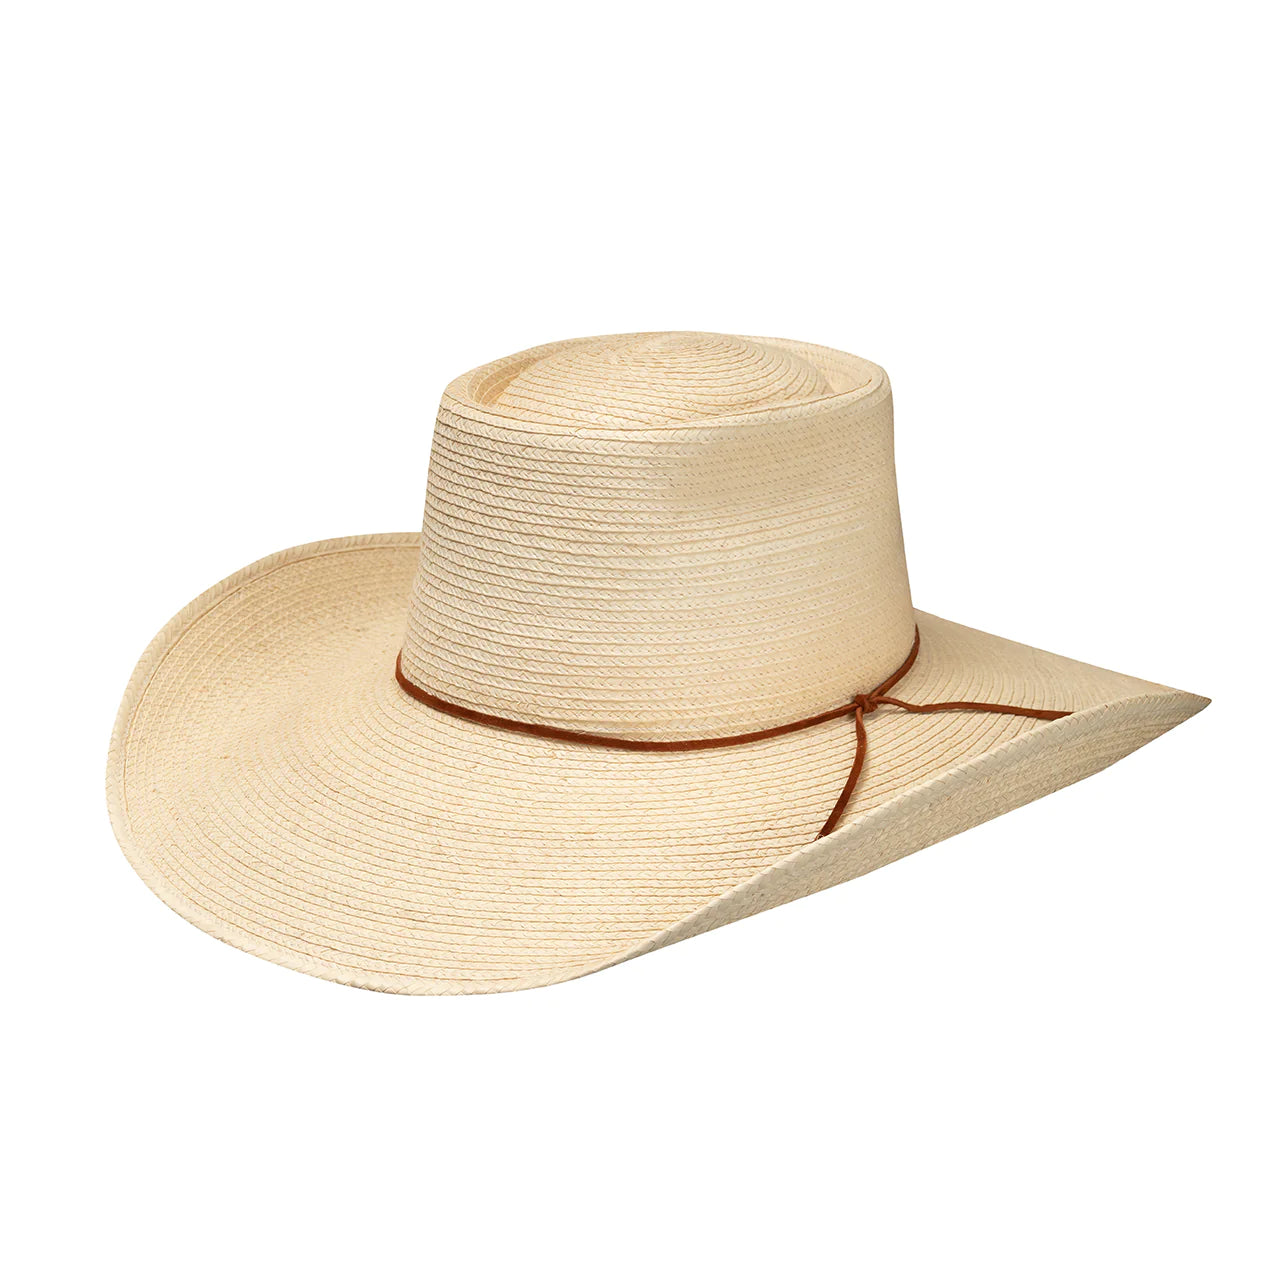 Sunbody Reata 3 Palm Leaf Hat in Natural